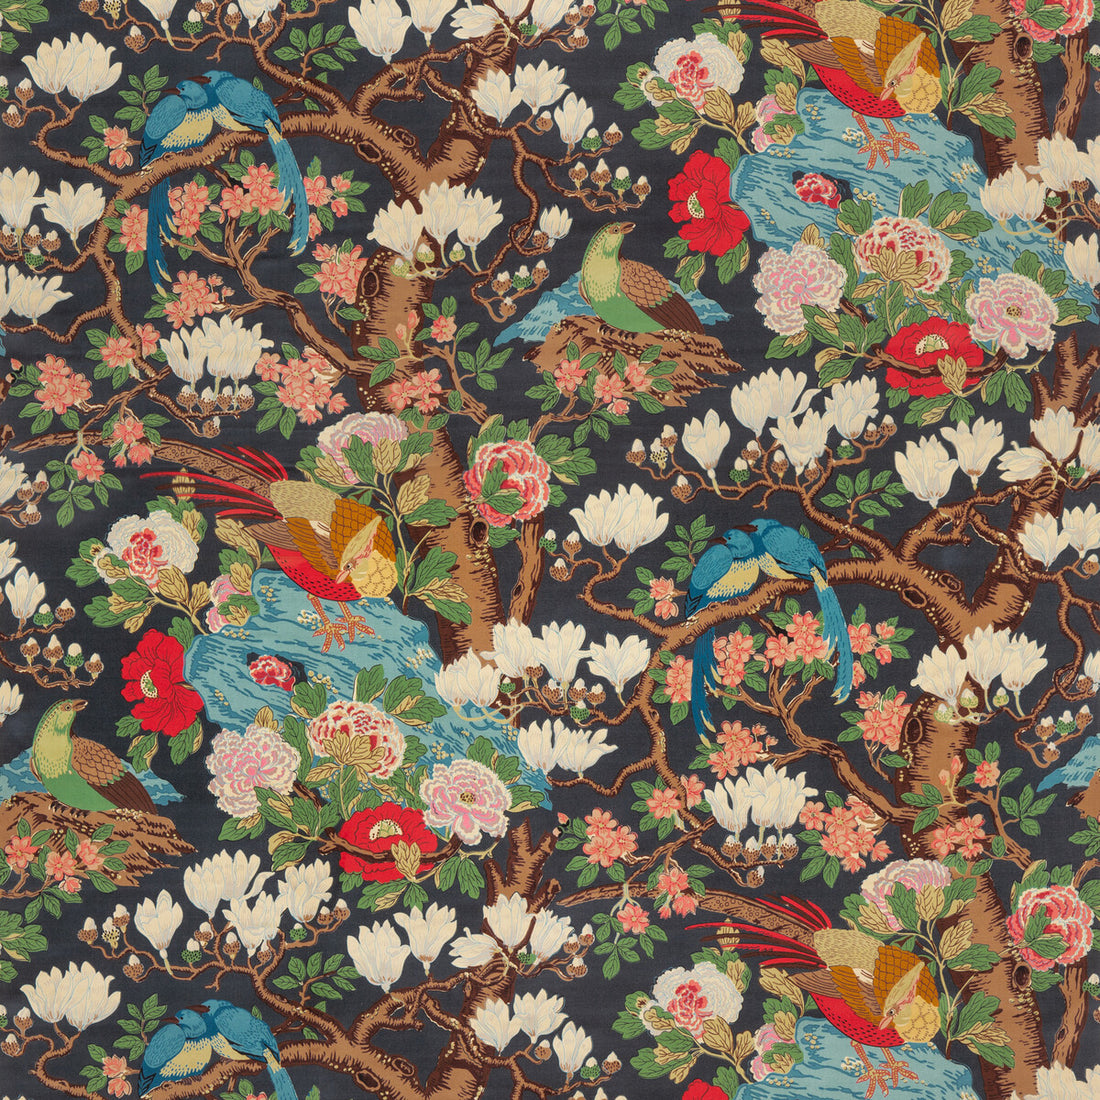 Rockbird Velvet fabric in indigo color - pattern BP10815.1.0 - by G P &amp; J Baker in the Signature Velvets collection